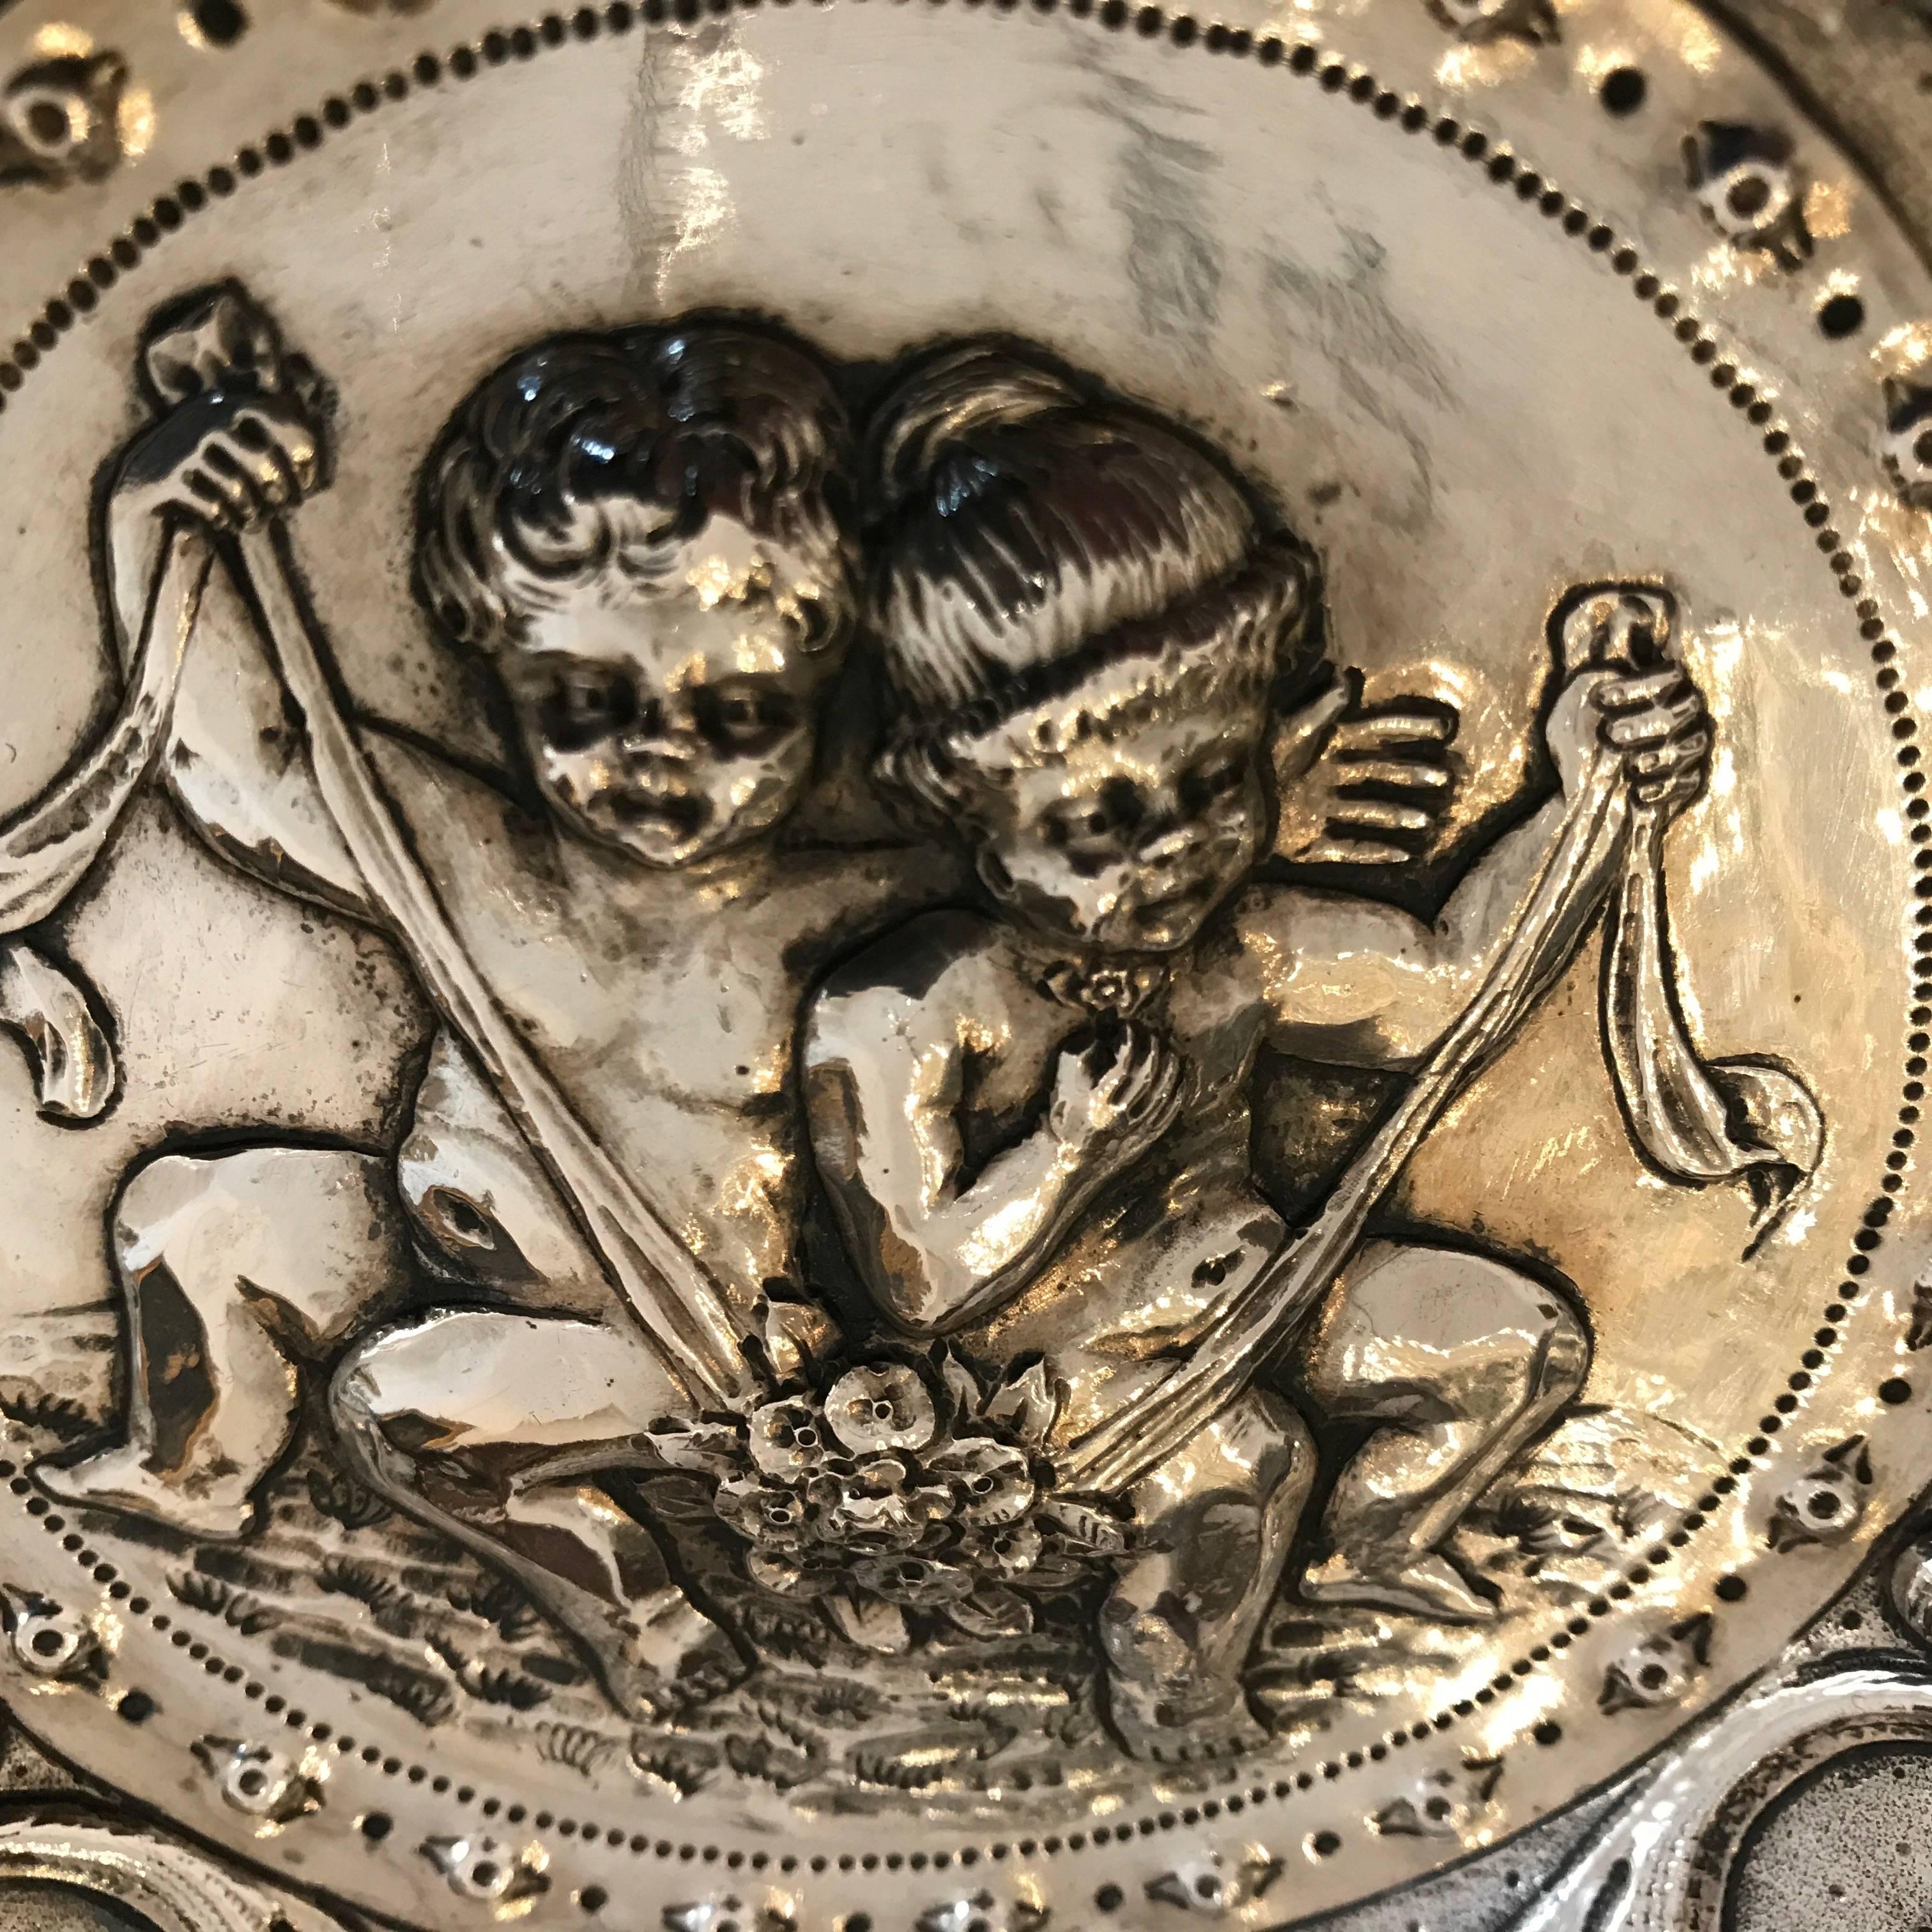 19th Century European Repoussé Silver Dish with Children Grotesque Mask FIgures 3